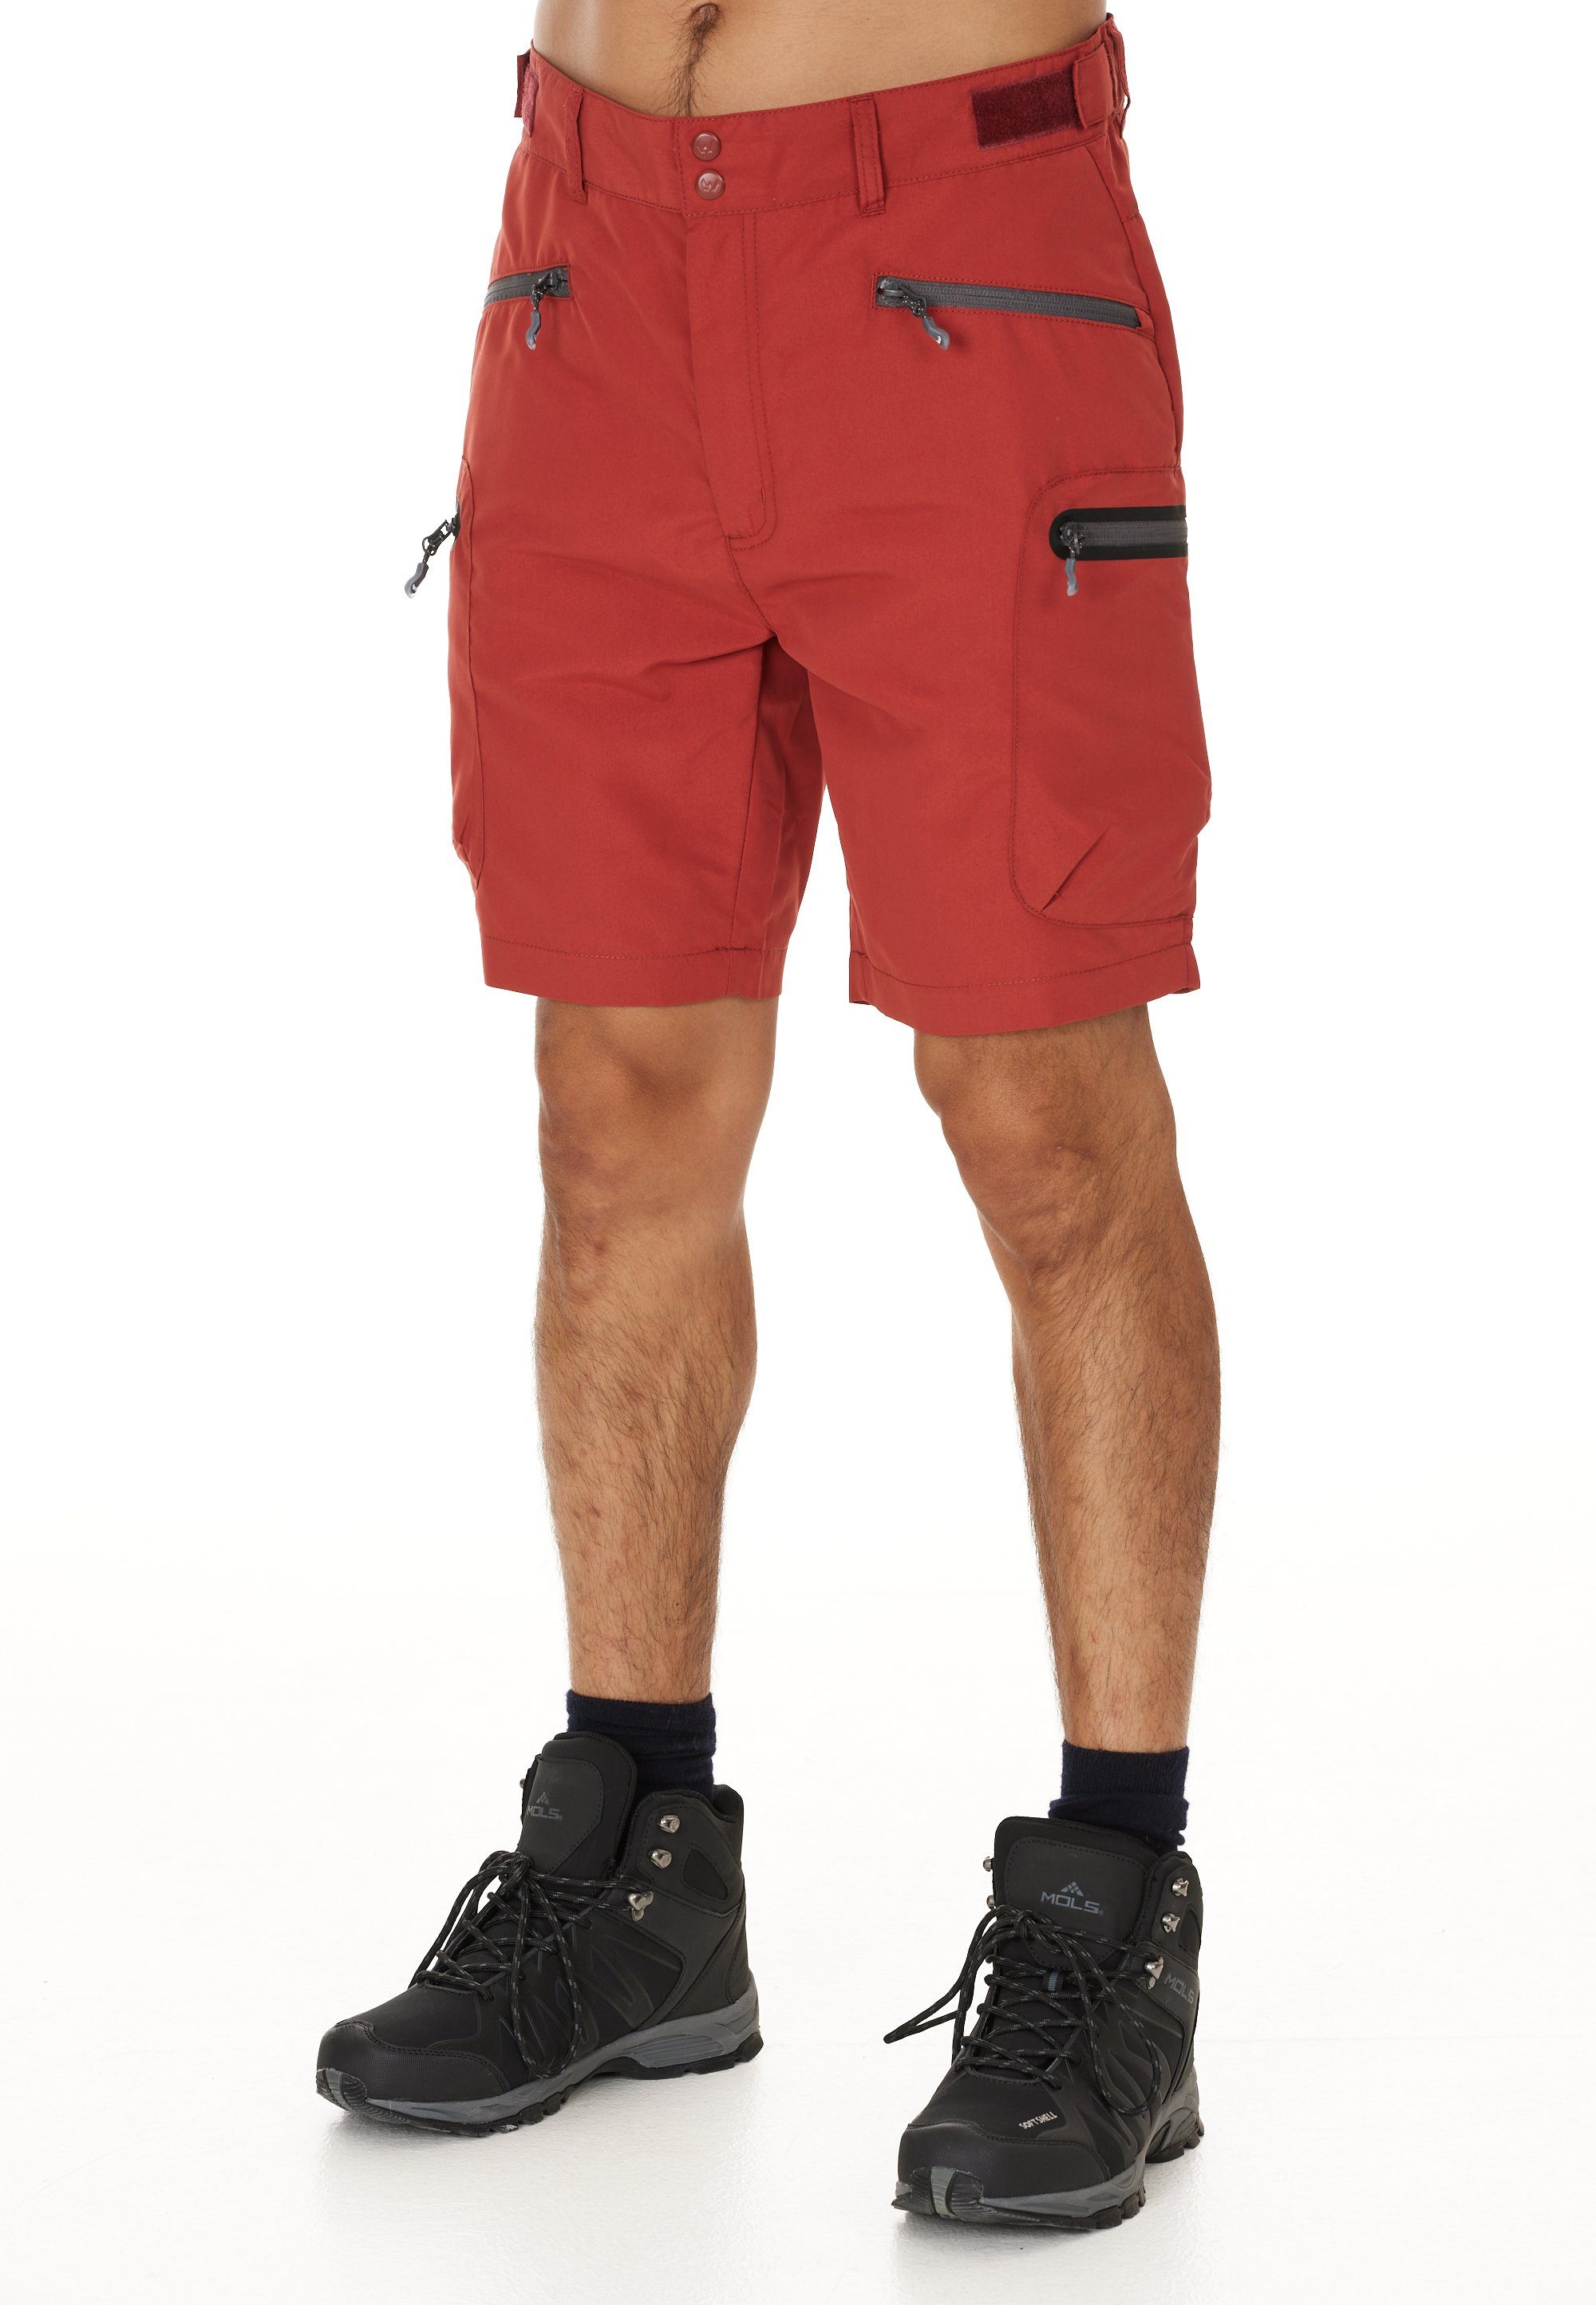 WHISTLER Shorts Stian mit atmungsaktiven Eigenschaften rot